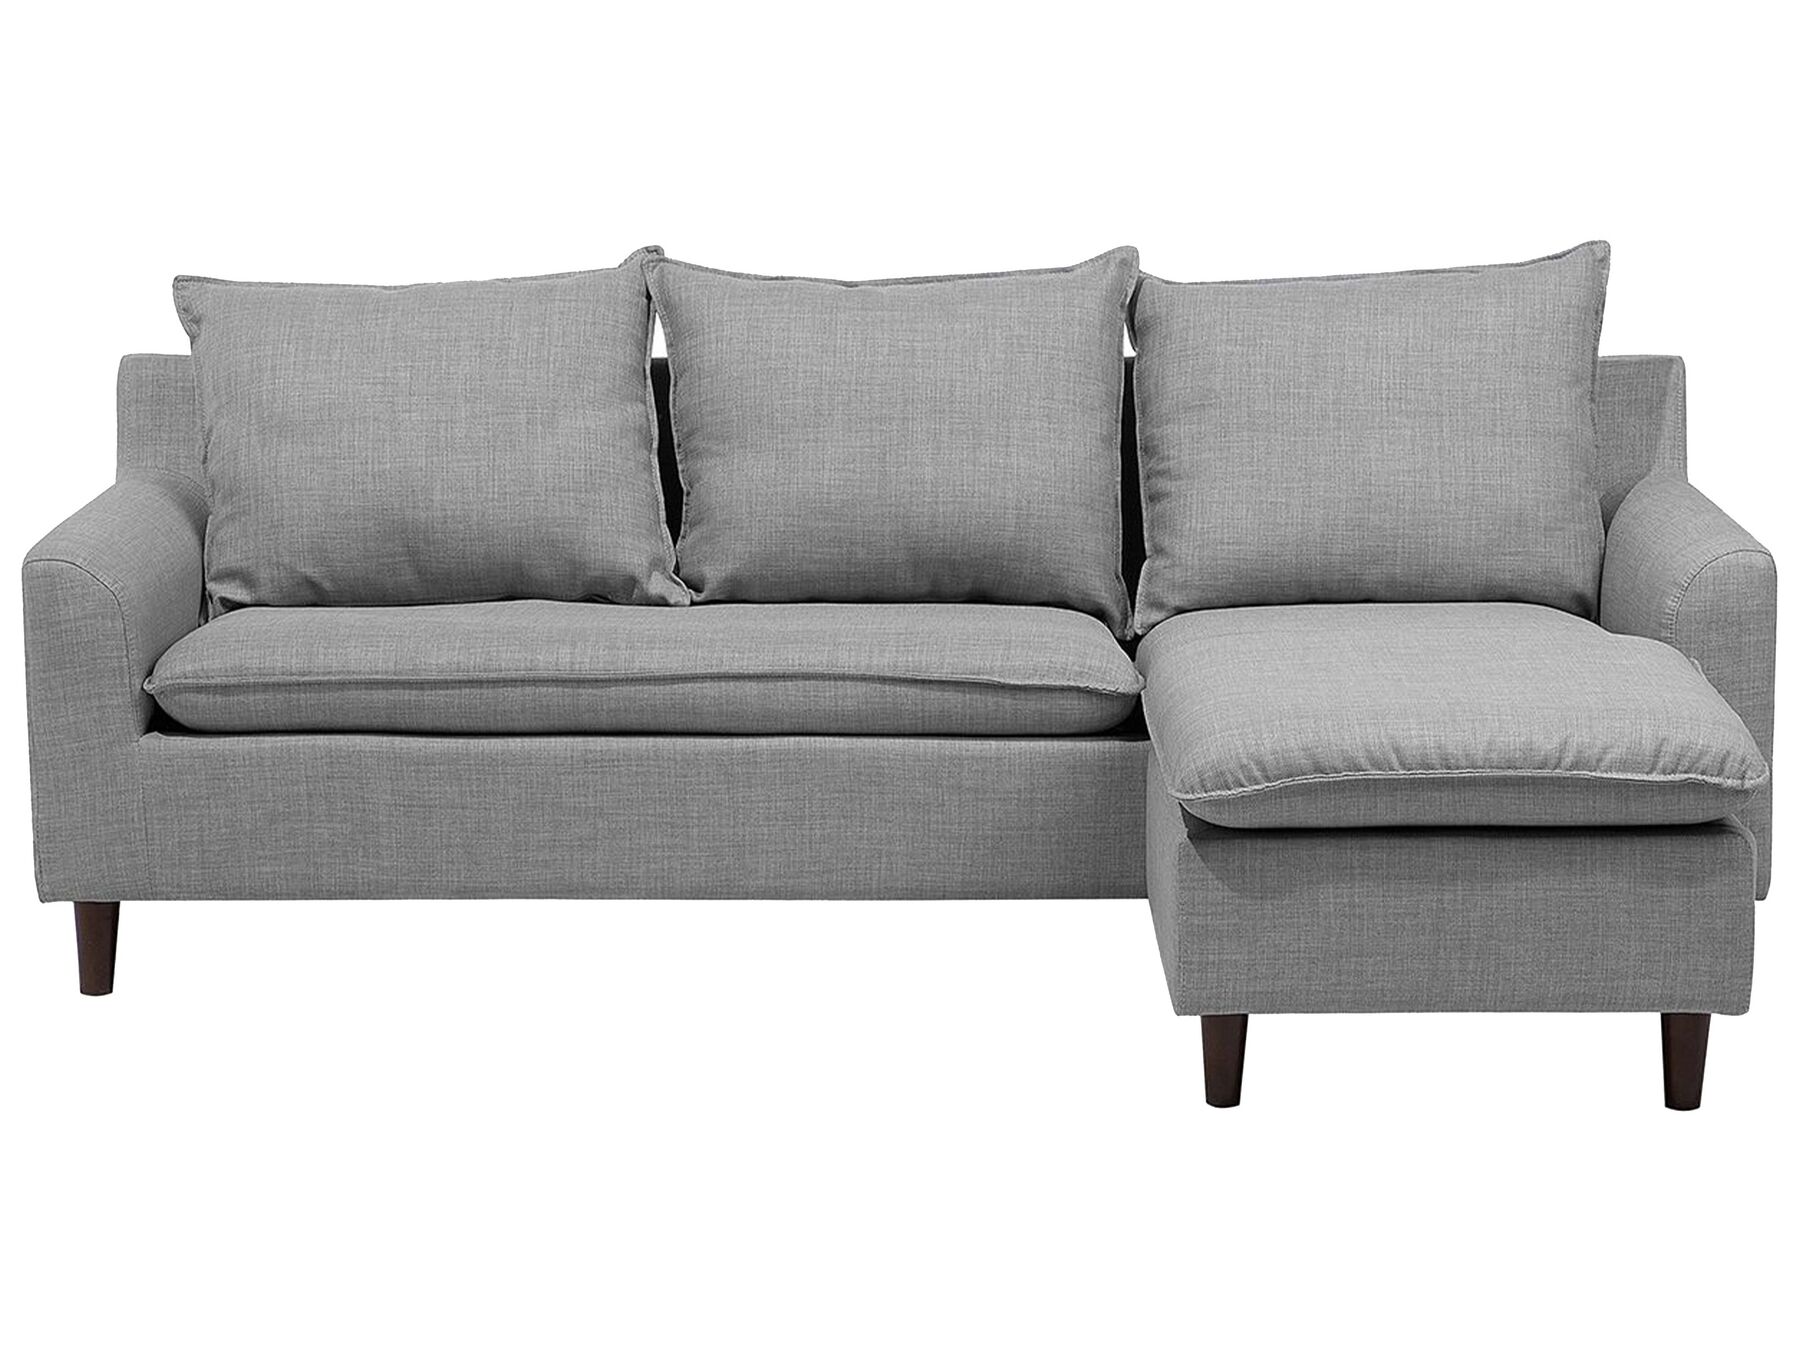 Modern Fabric Corner Sectional Sofa Light Grey Polyester Solid Wood Legs Elvenes